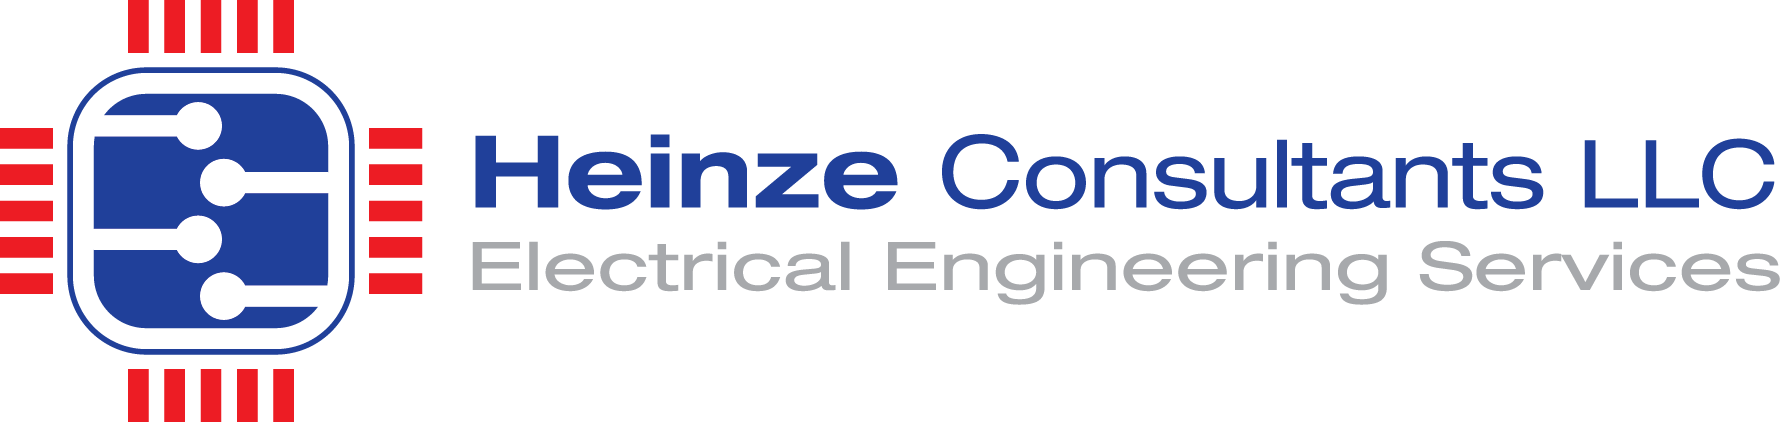 heinze logo